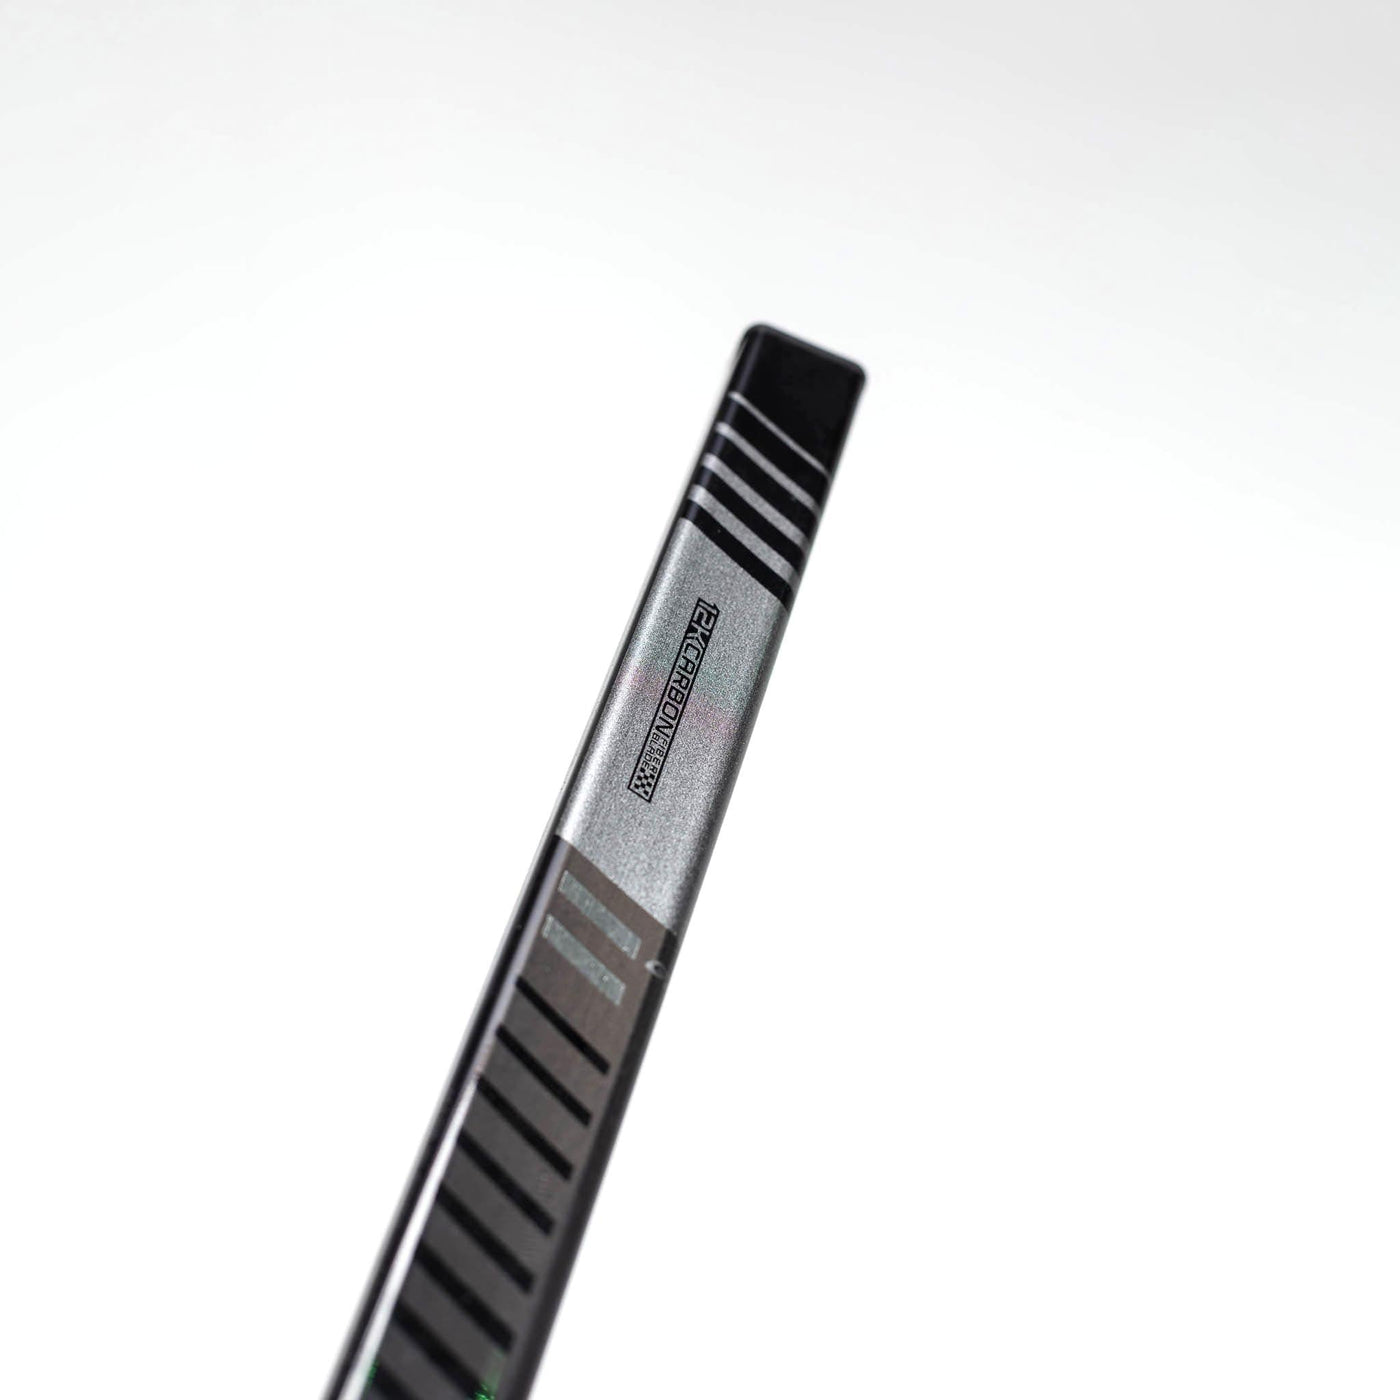 Bauer Supreme Matrix Senior Hockey Stick (2019)